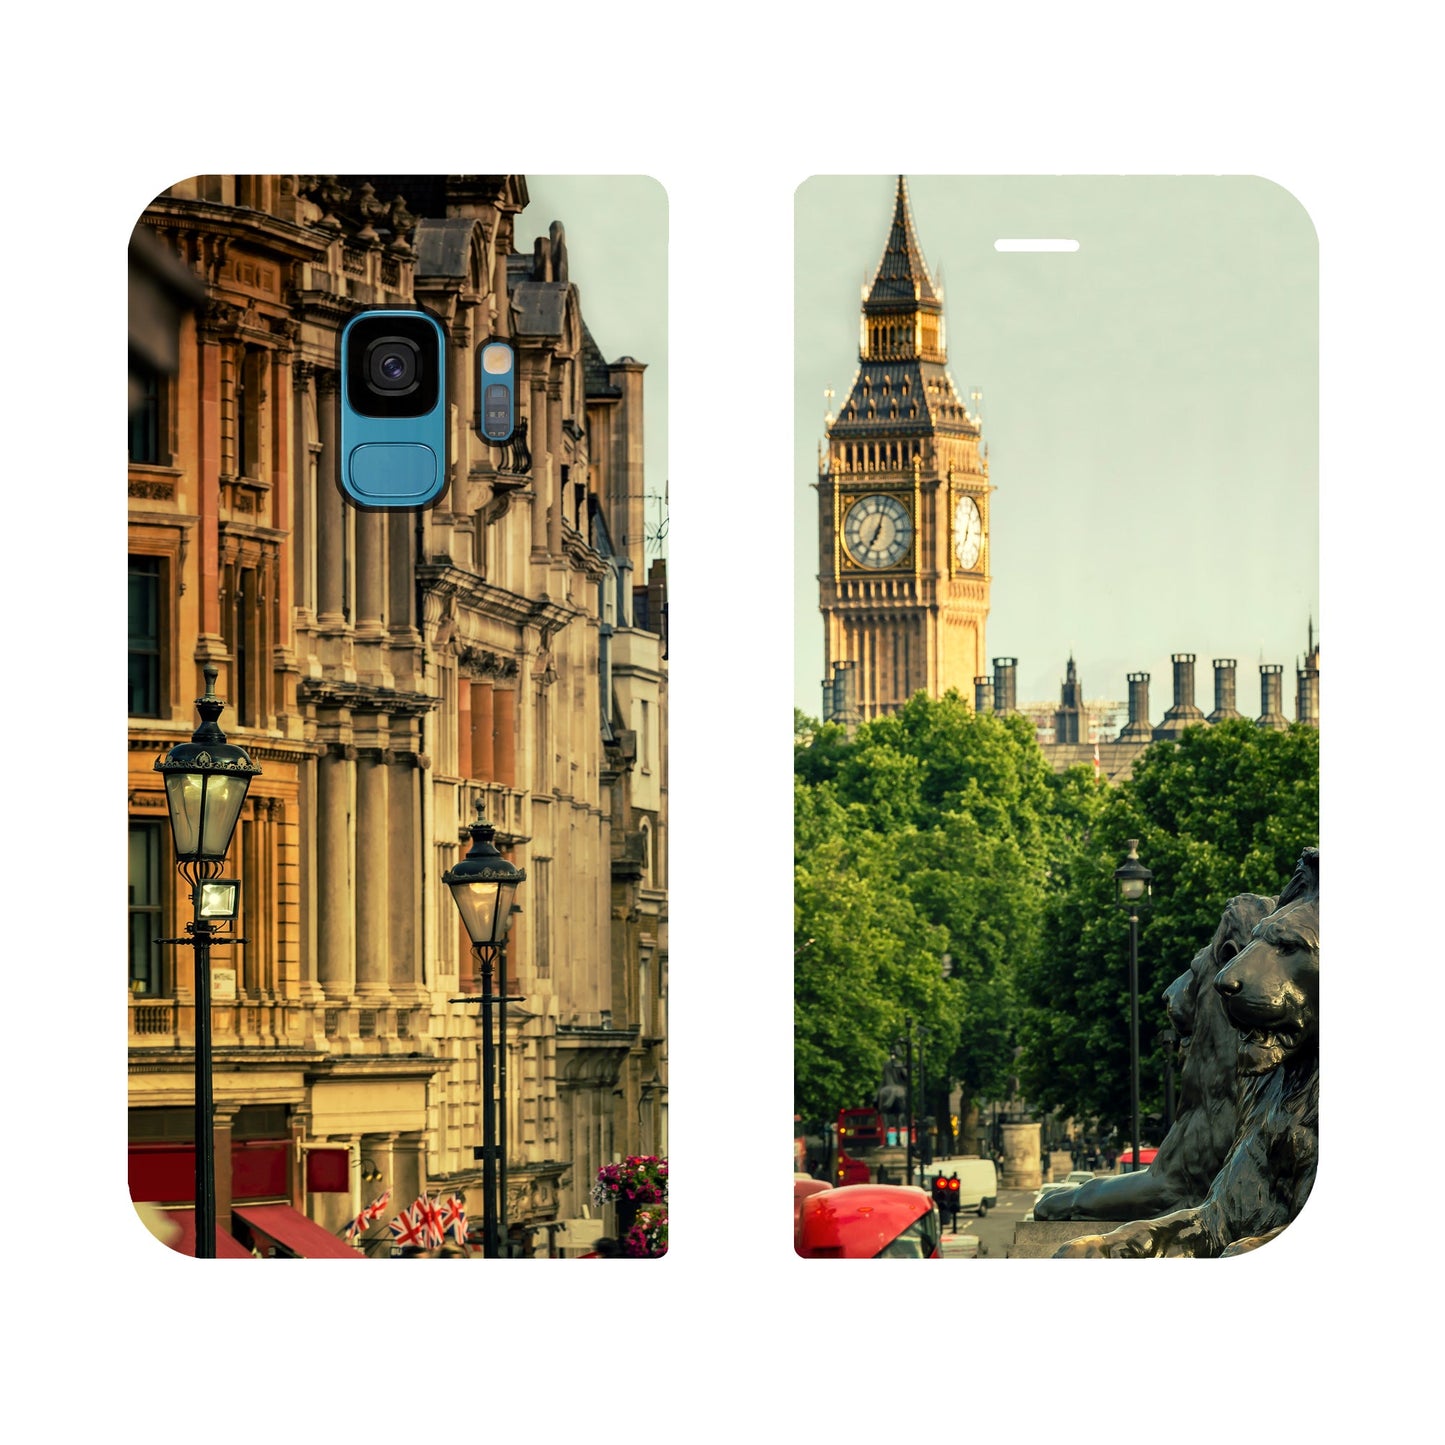 Coque London City Panorama pour iPhone et Samsung